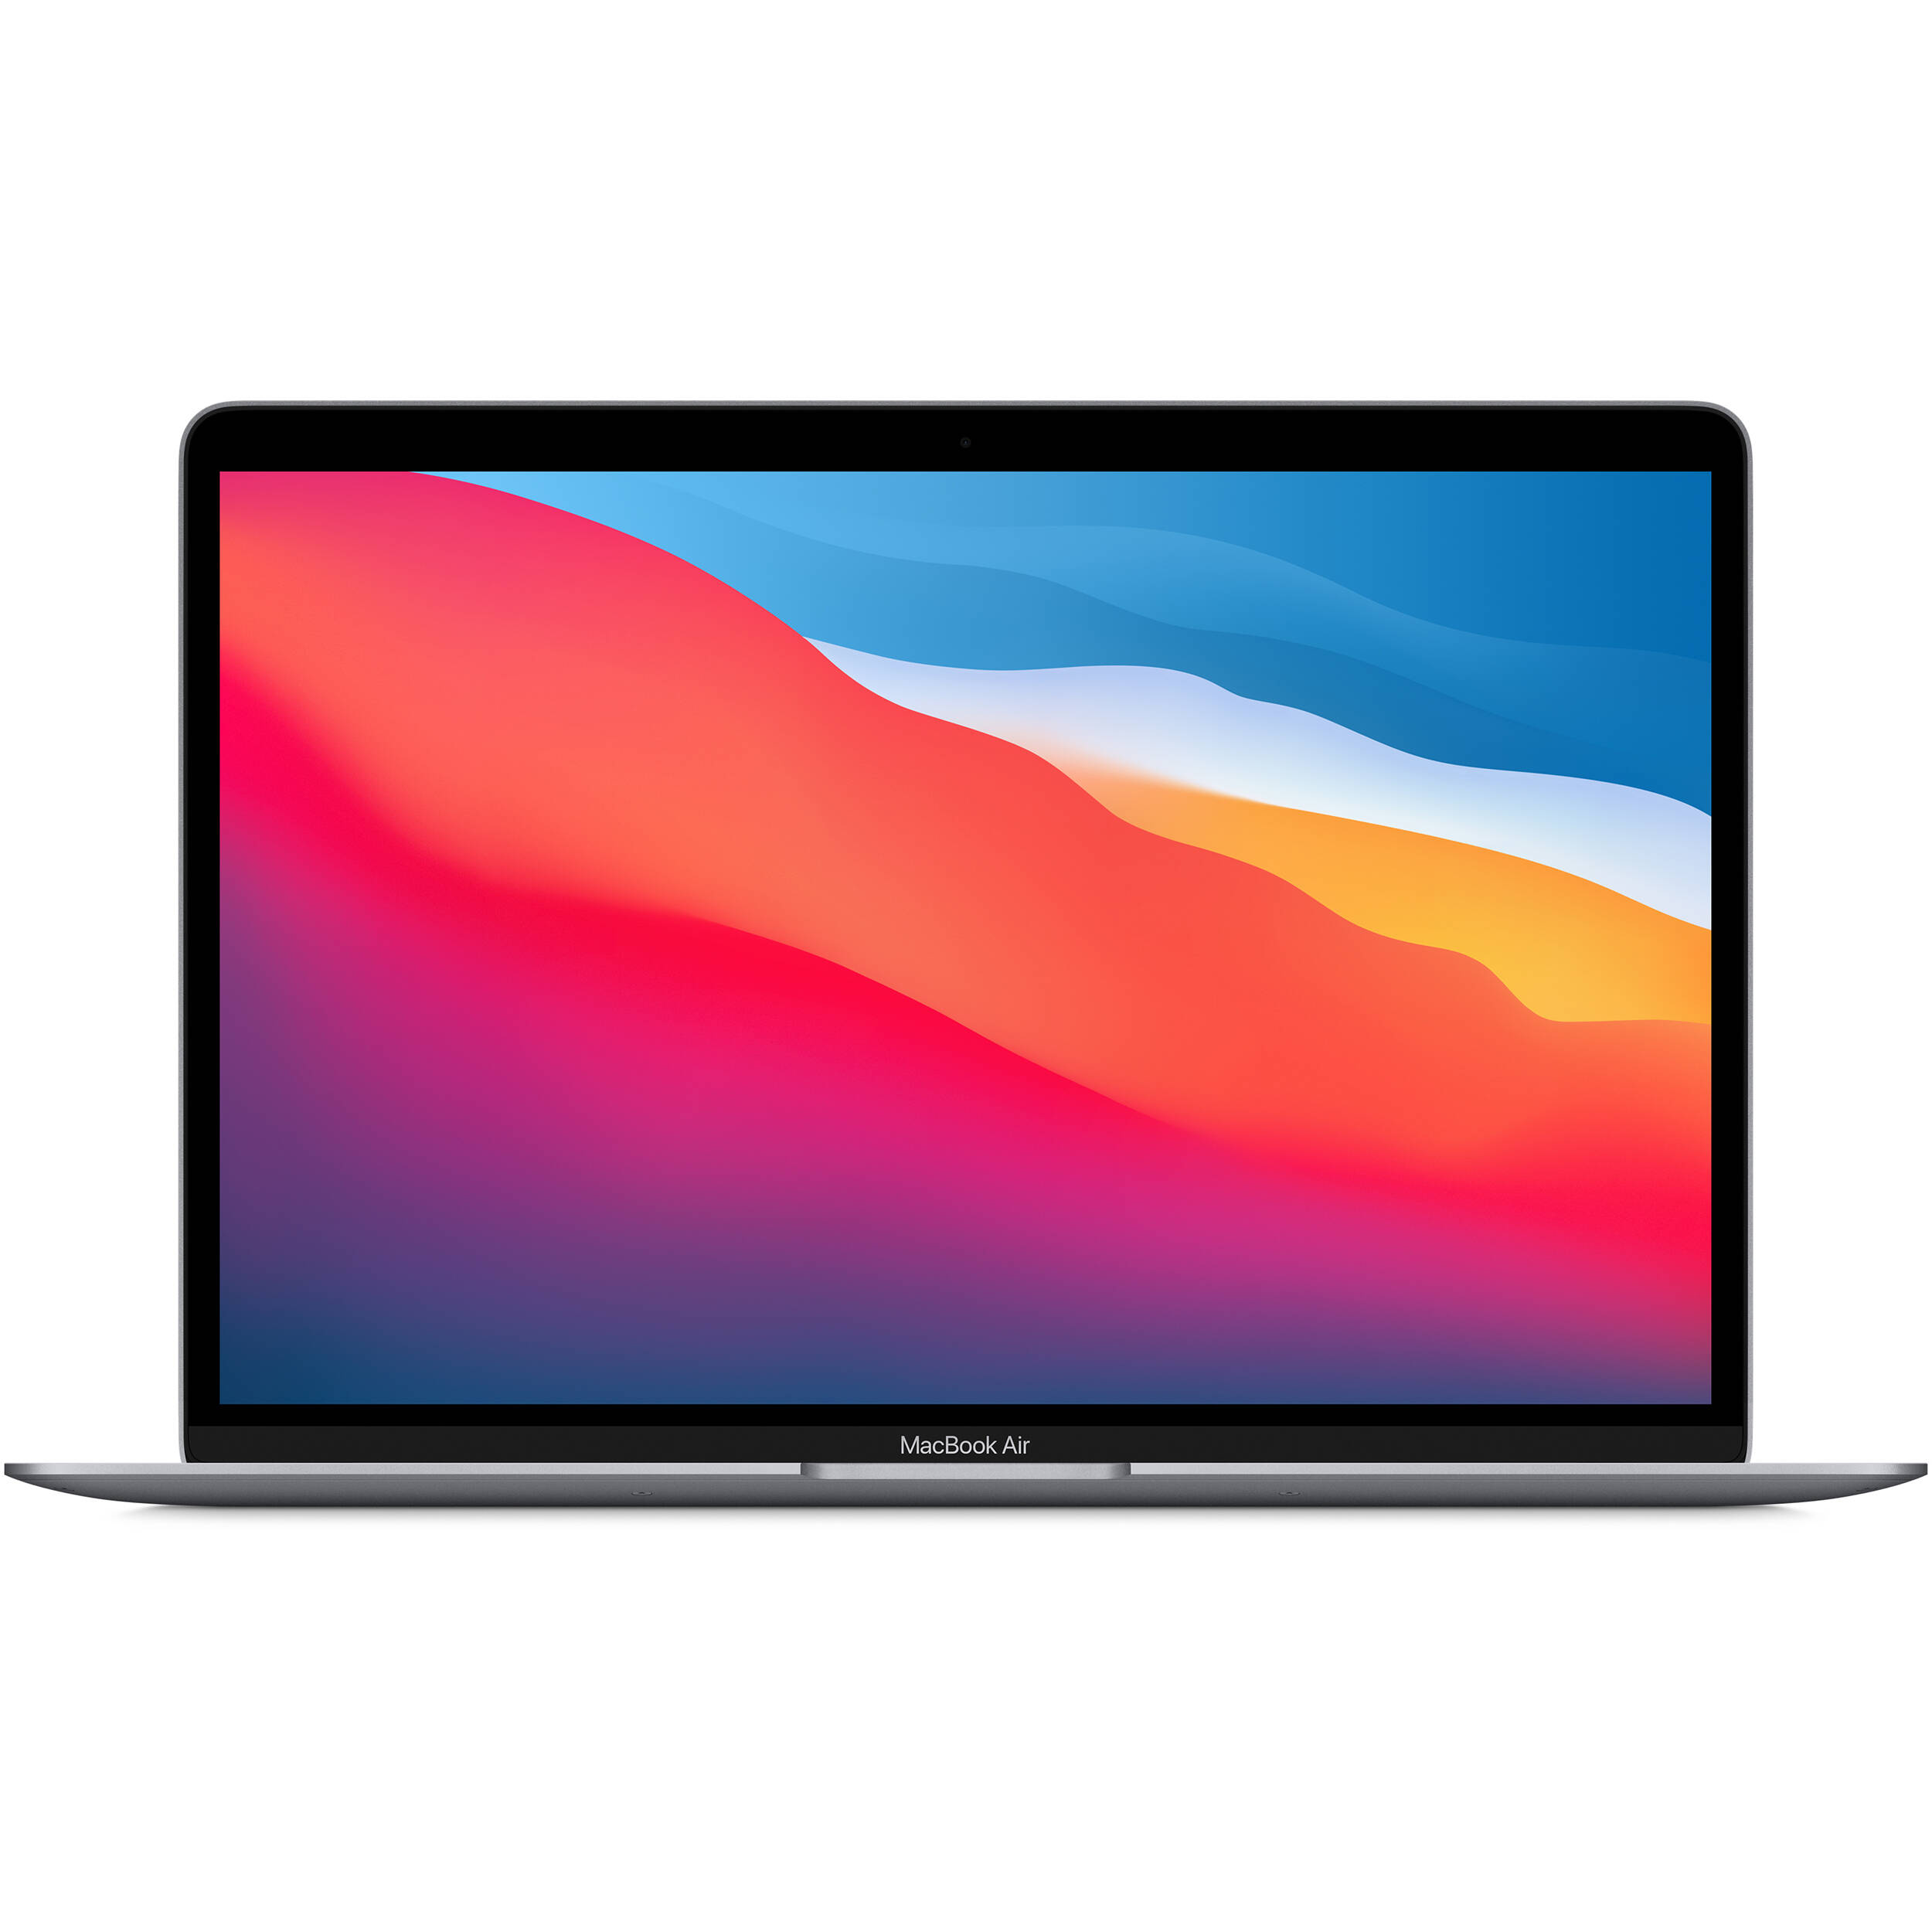 نکته خرید - قیمت روز لپ تاپ 13 اینچی اپل مدل MacBook Air MGN63 2020 خرید